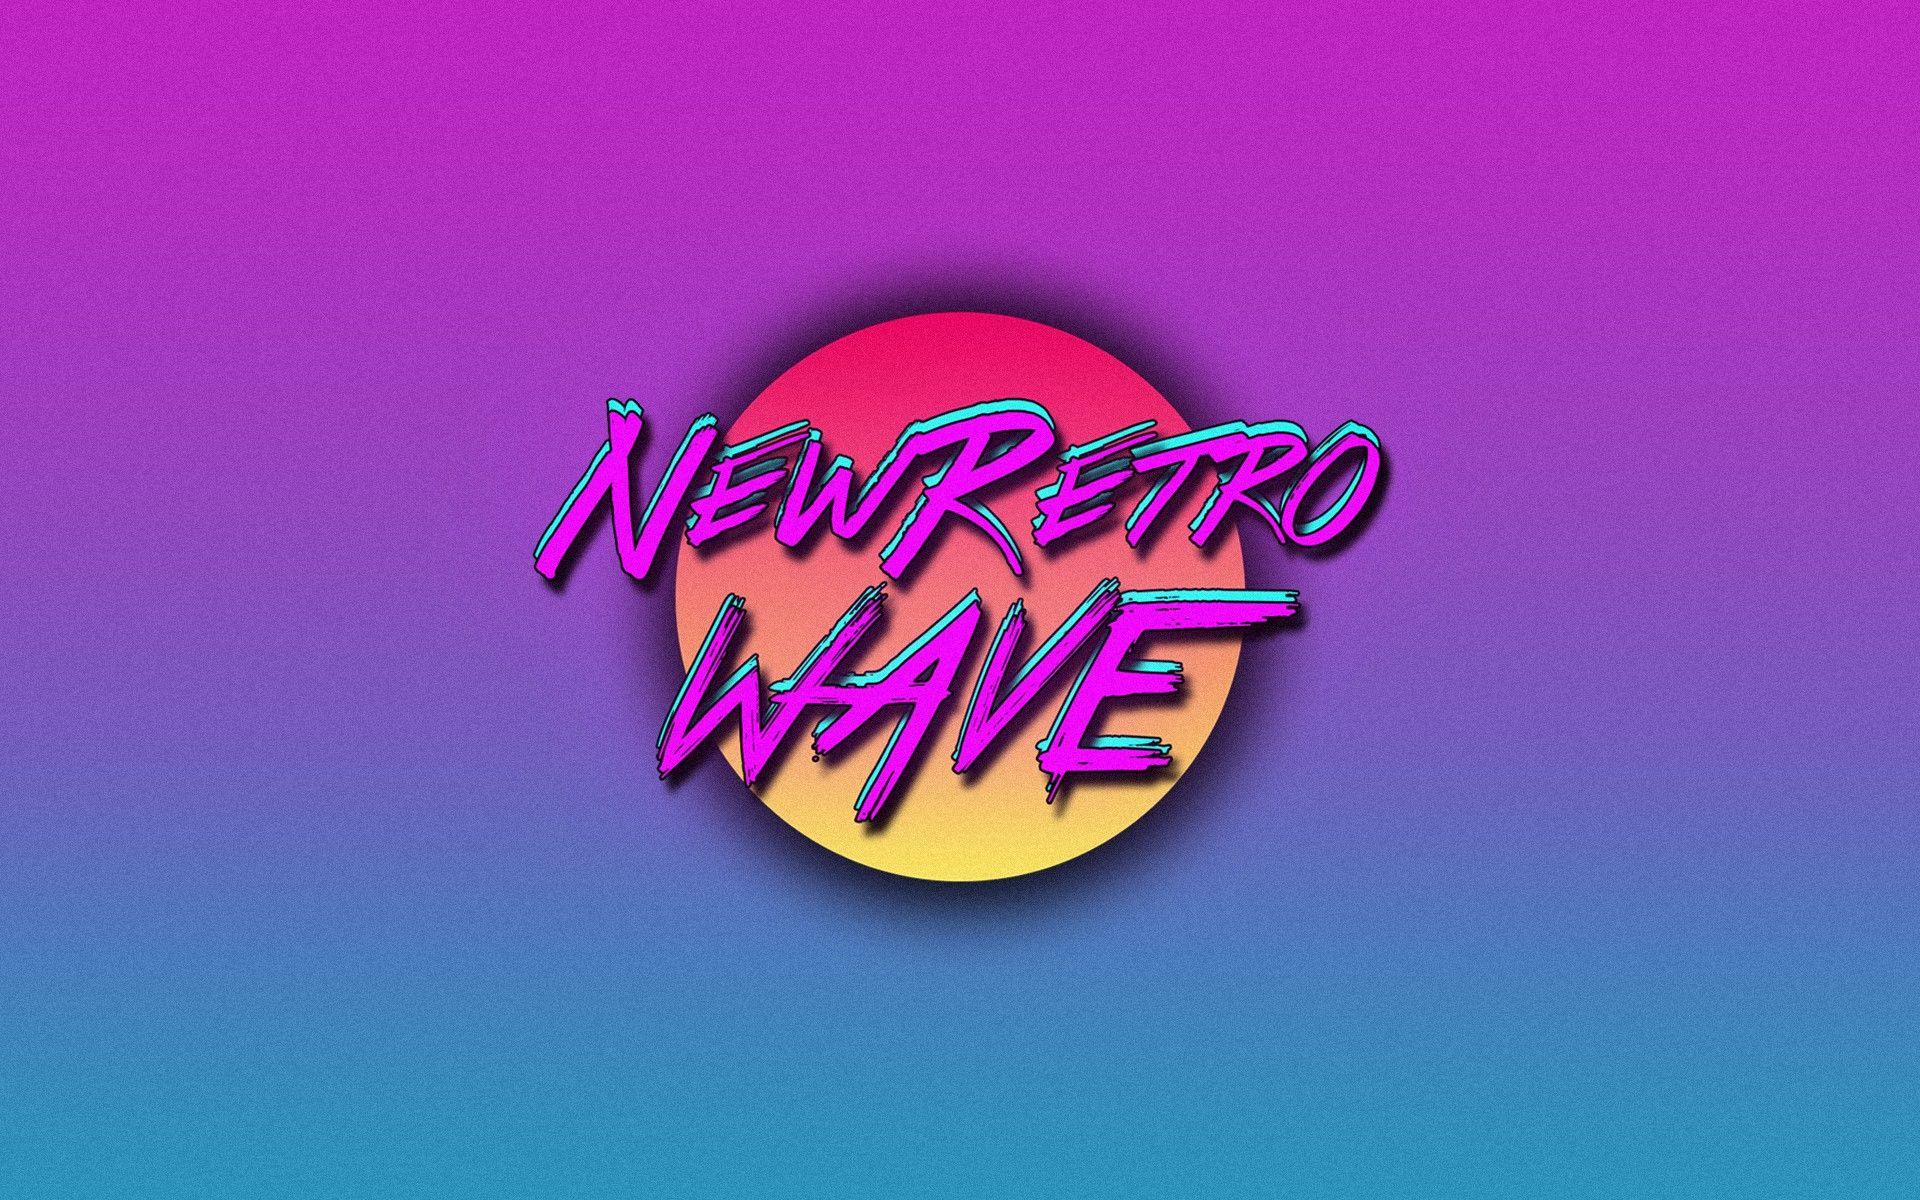 New Retro Wave, #vintage, #synthwave, #neon, s, #retro games